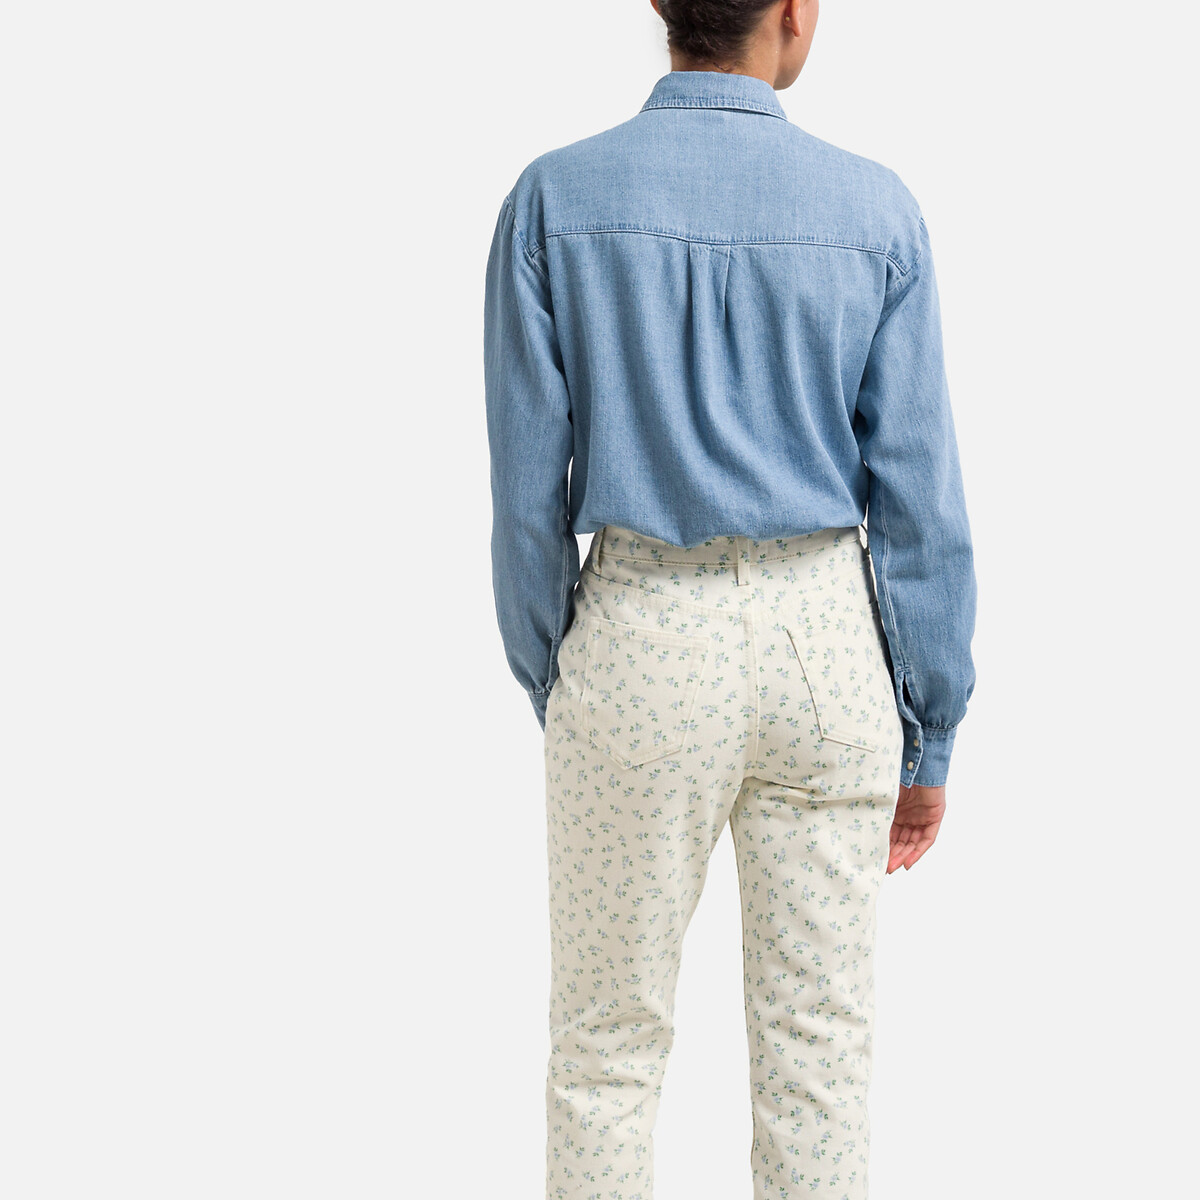 Рубашка Из джинсовой ткани с воланами M синий LaRedoute, размер M - фото 4